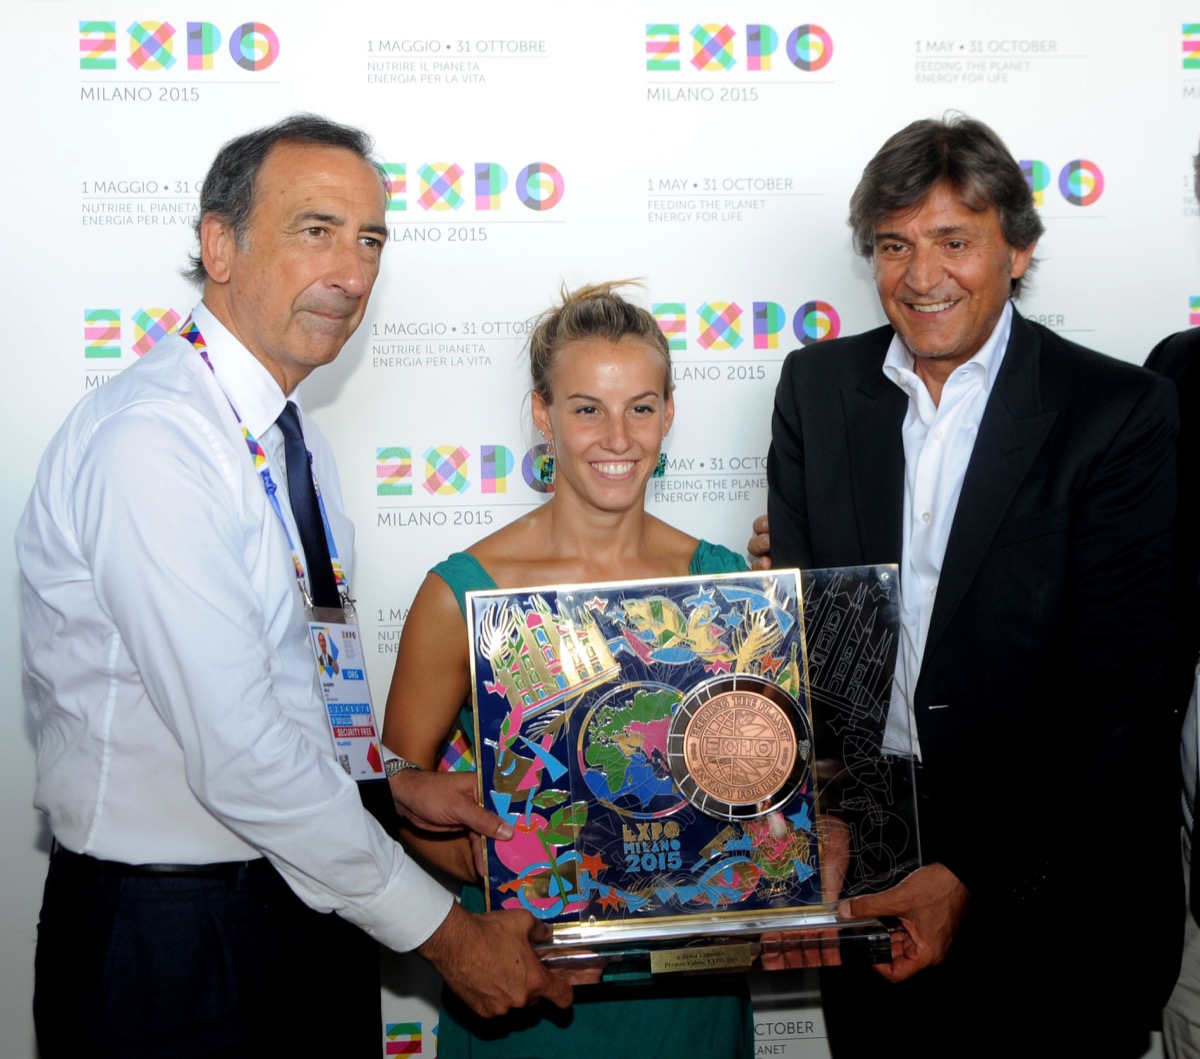 Expo Milano 2015, Tania Cagnotto ospite